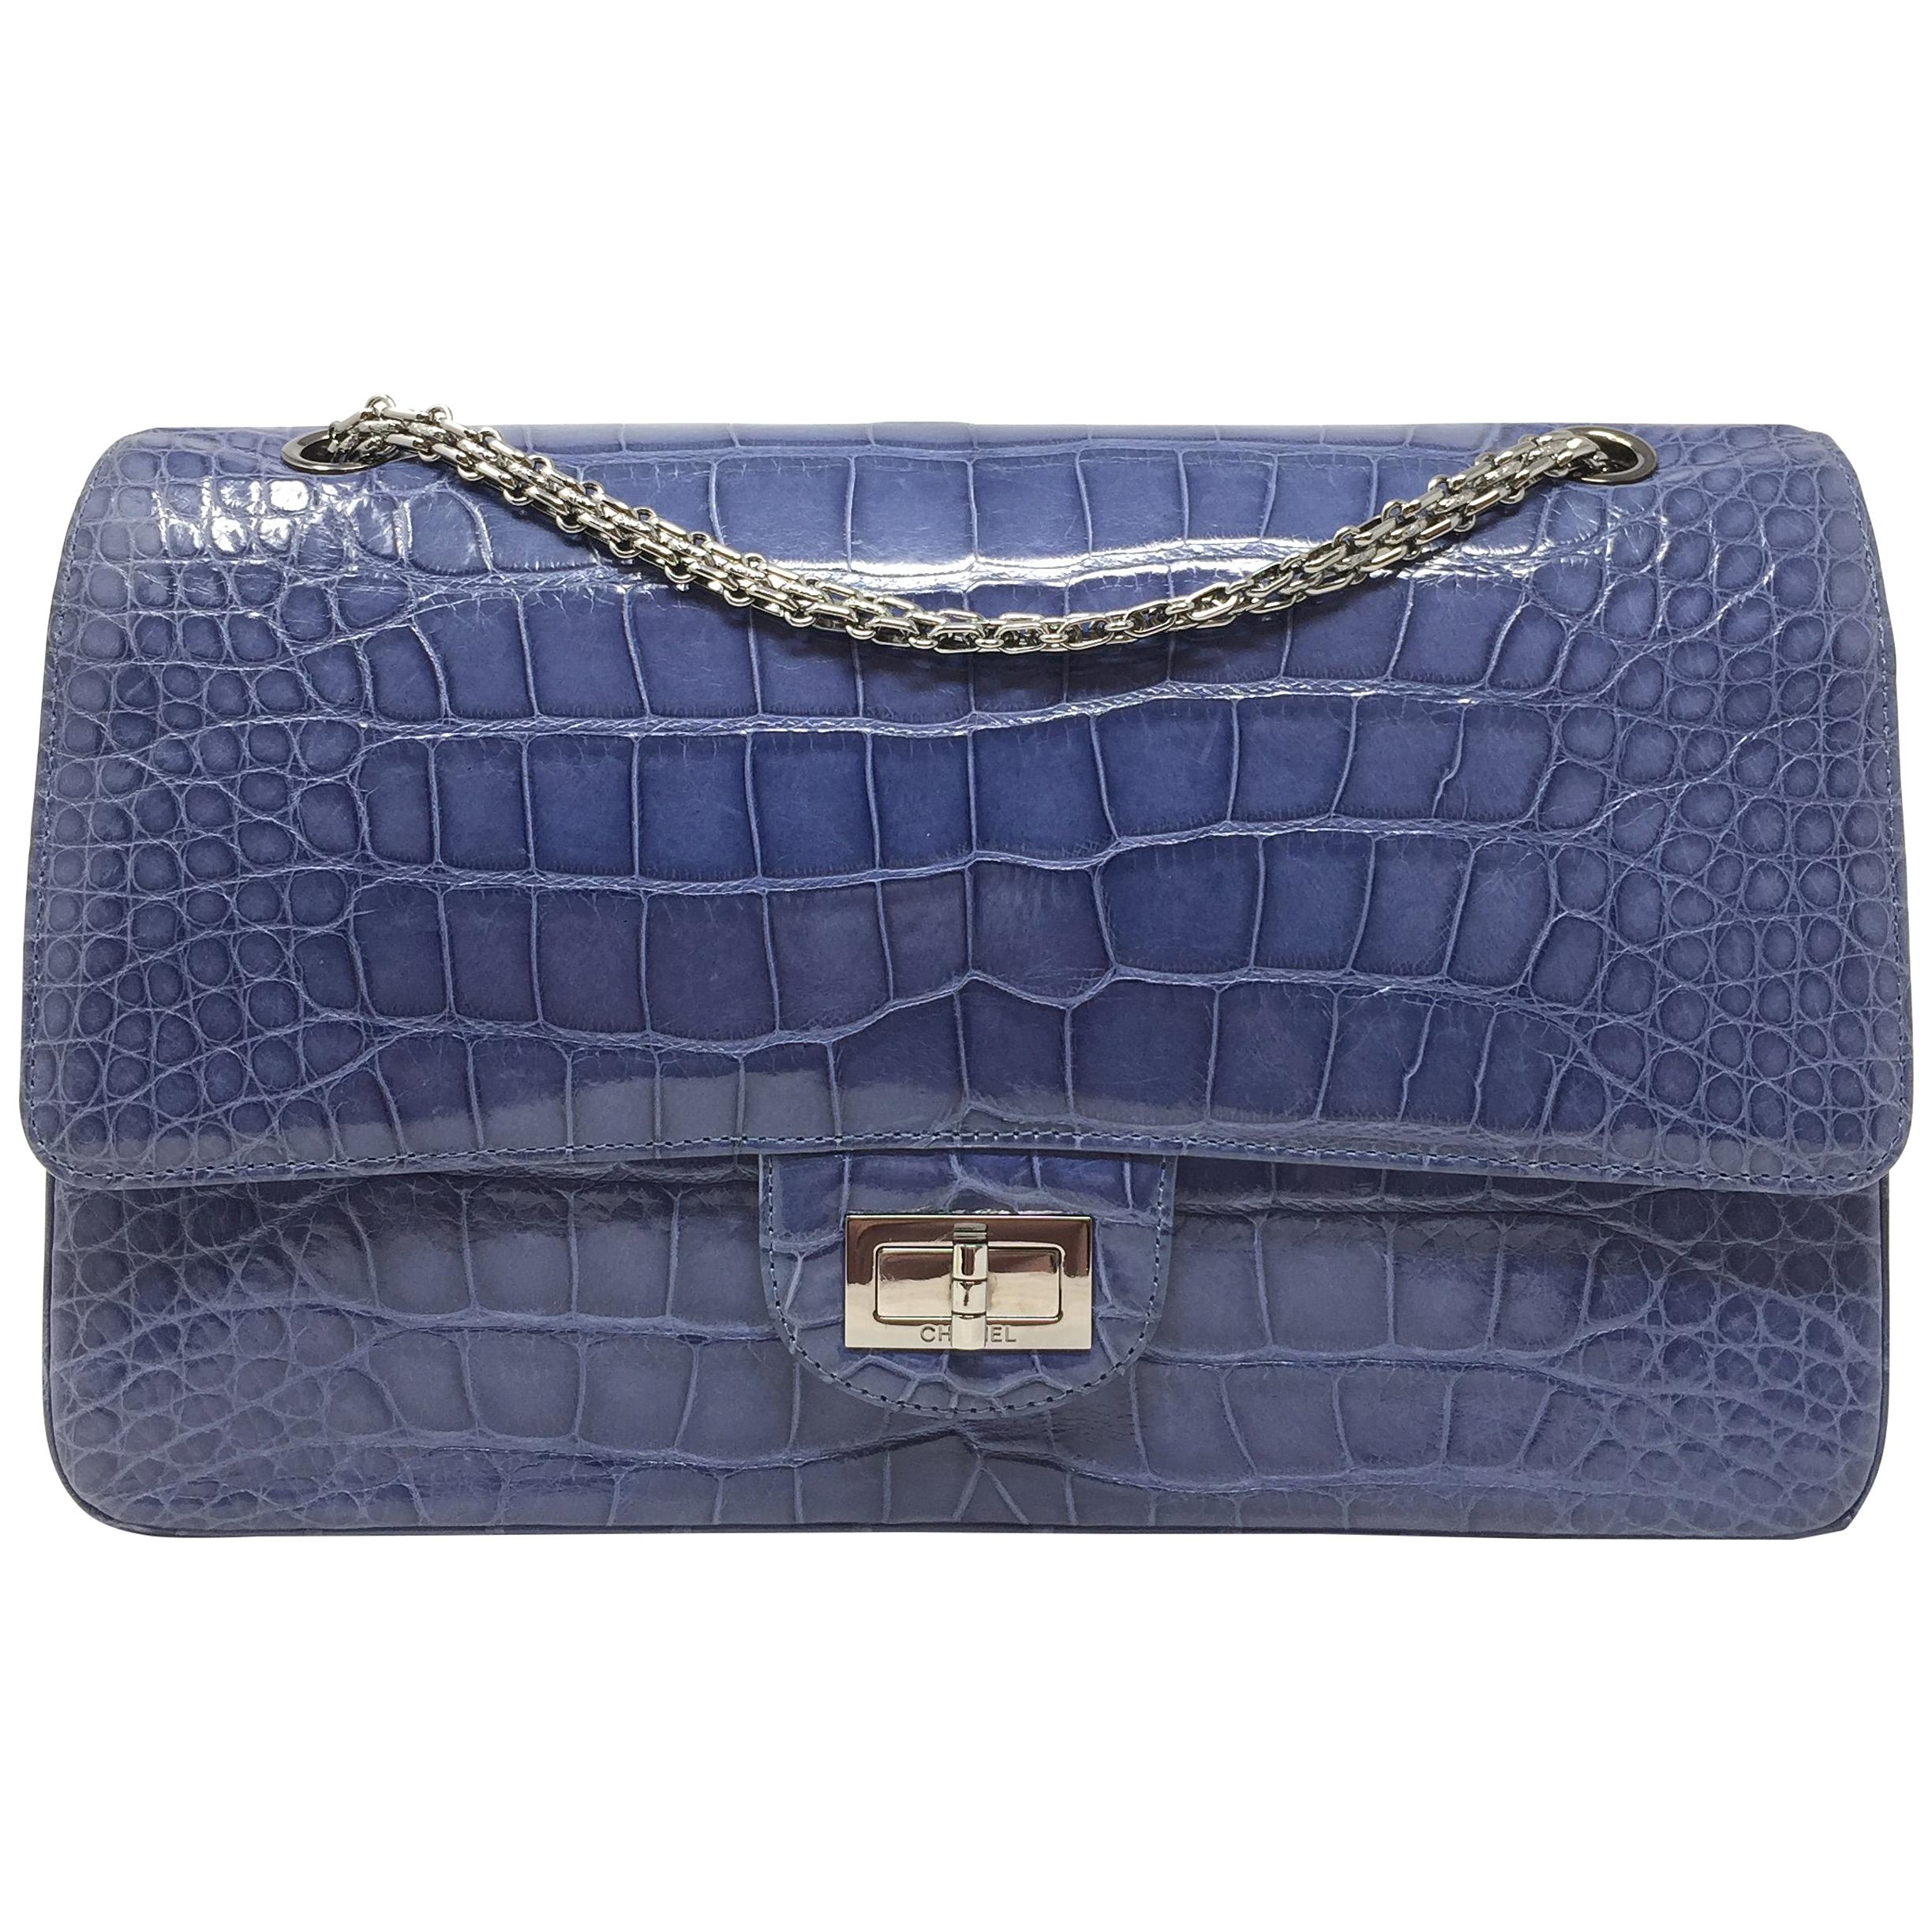 Chanel Bag Blue Shine Crocodile 2.55 Reissue Double Flap Timeless Bag, 2012